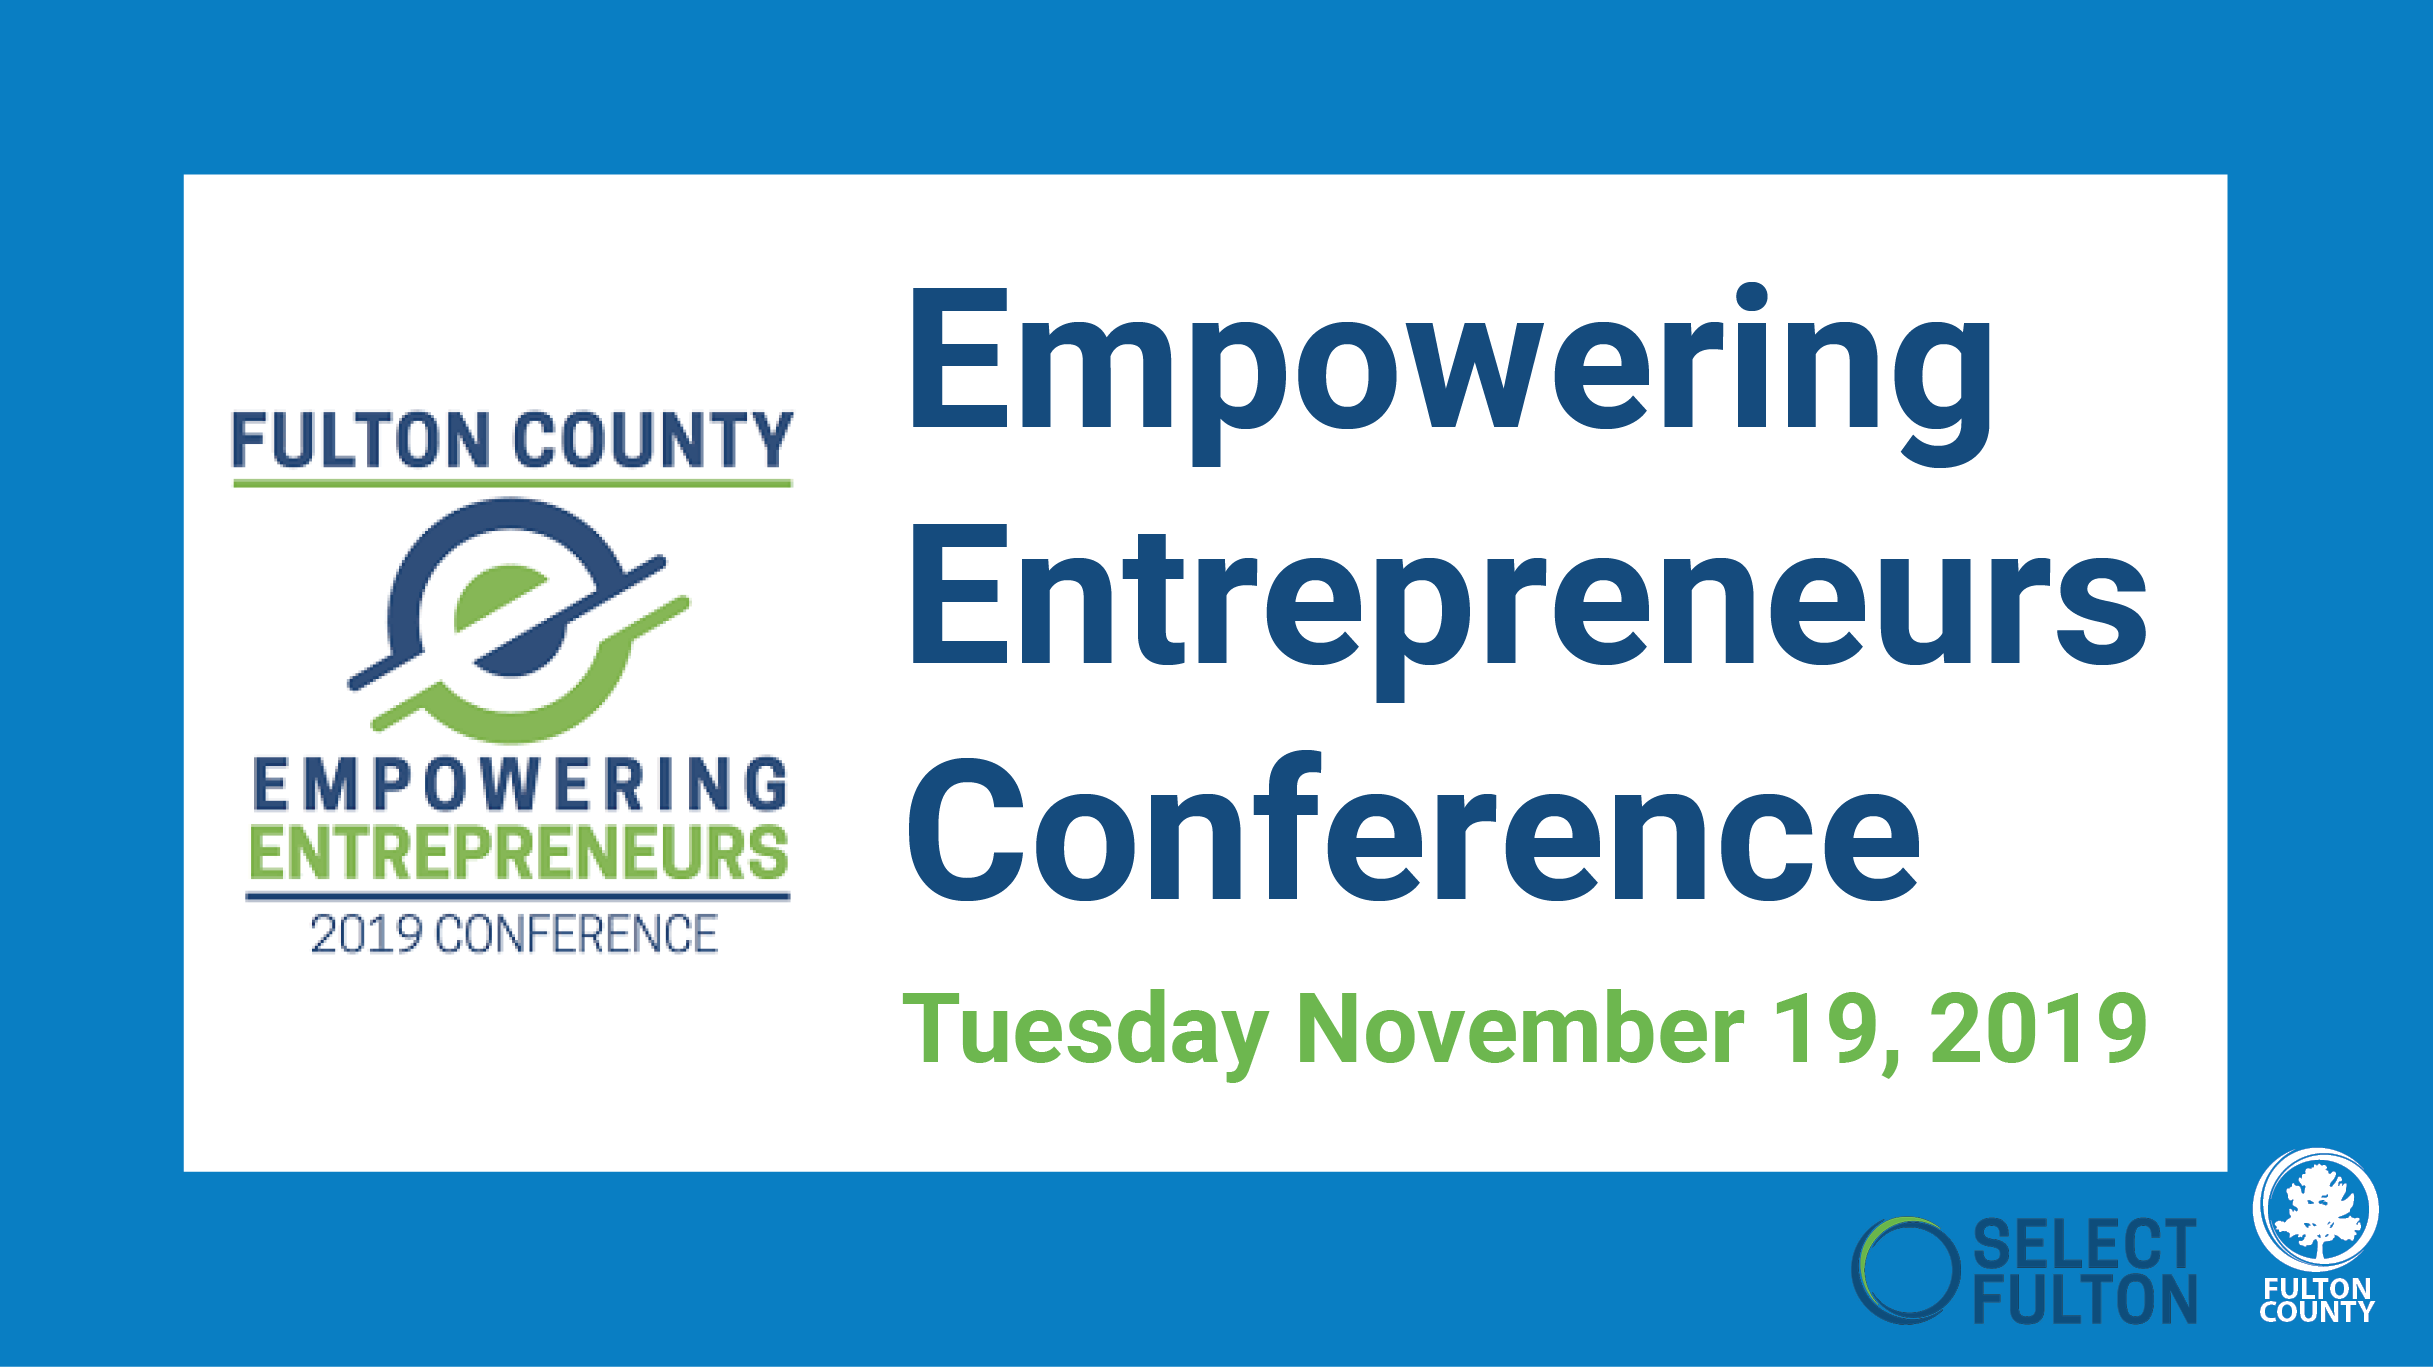 Empowering entrepreneurs conference graphic november 19